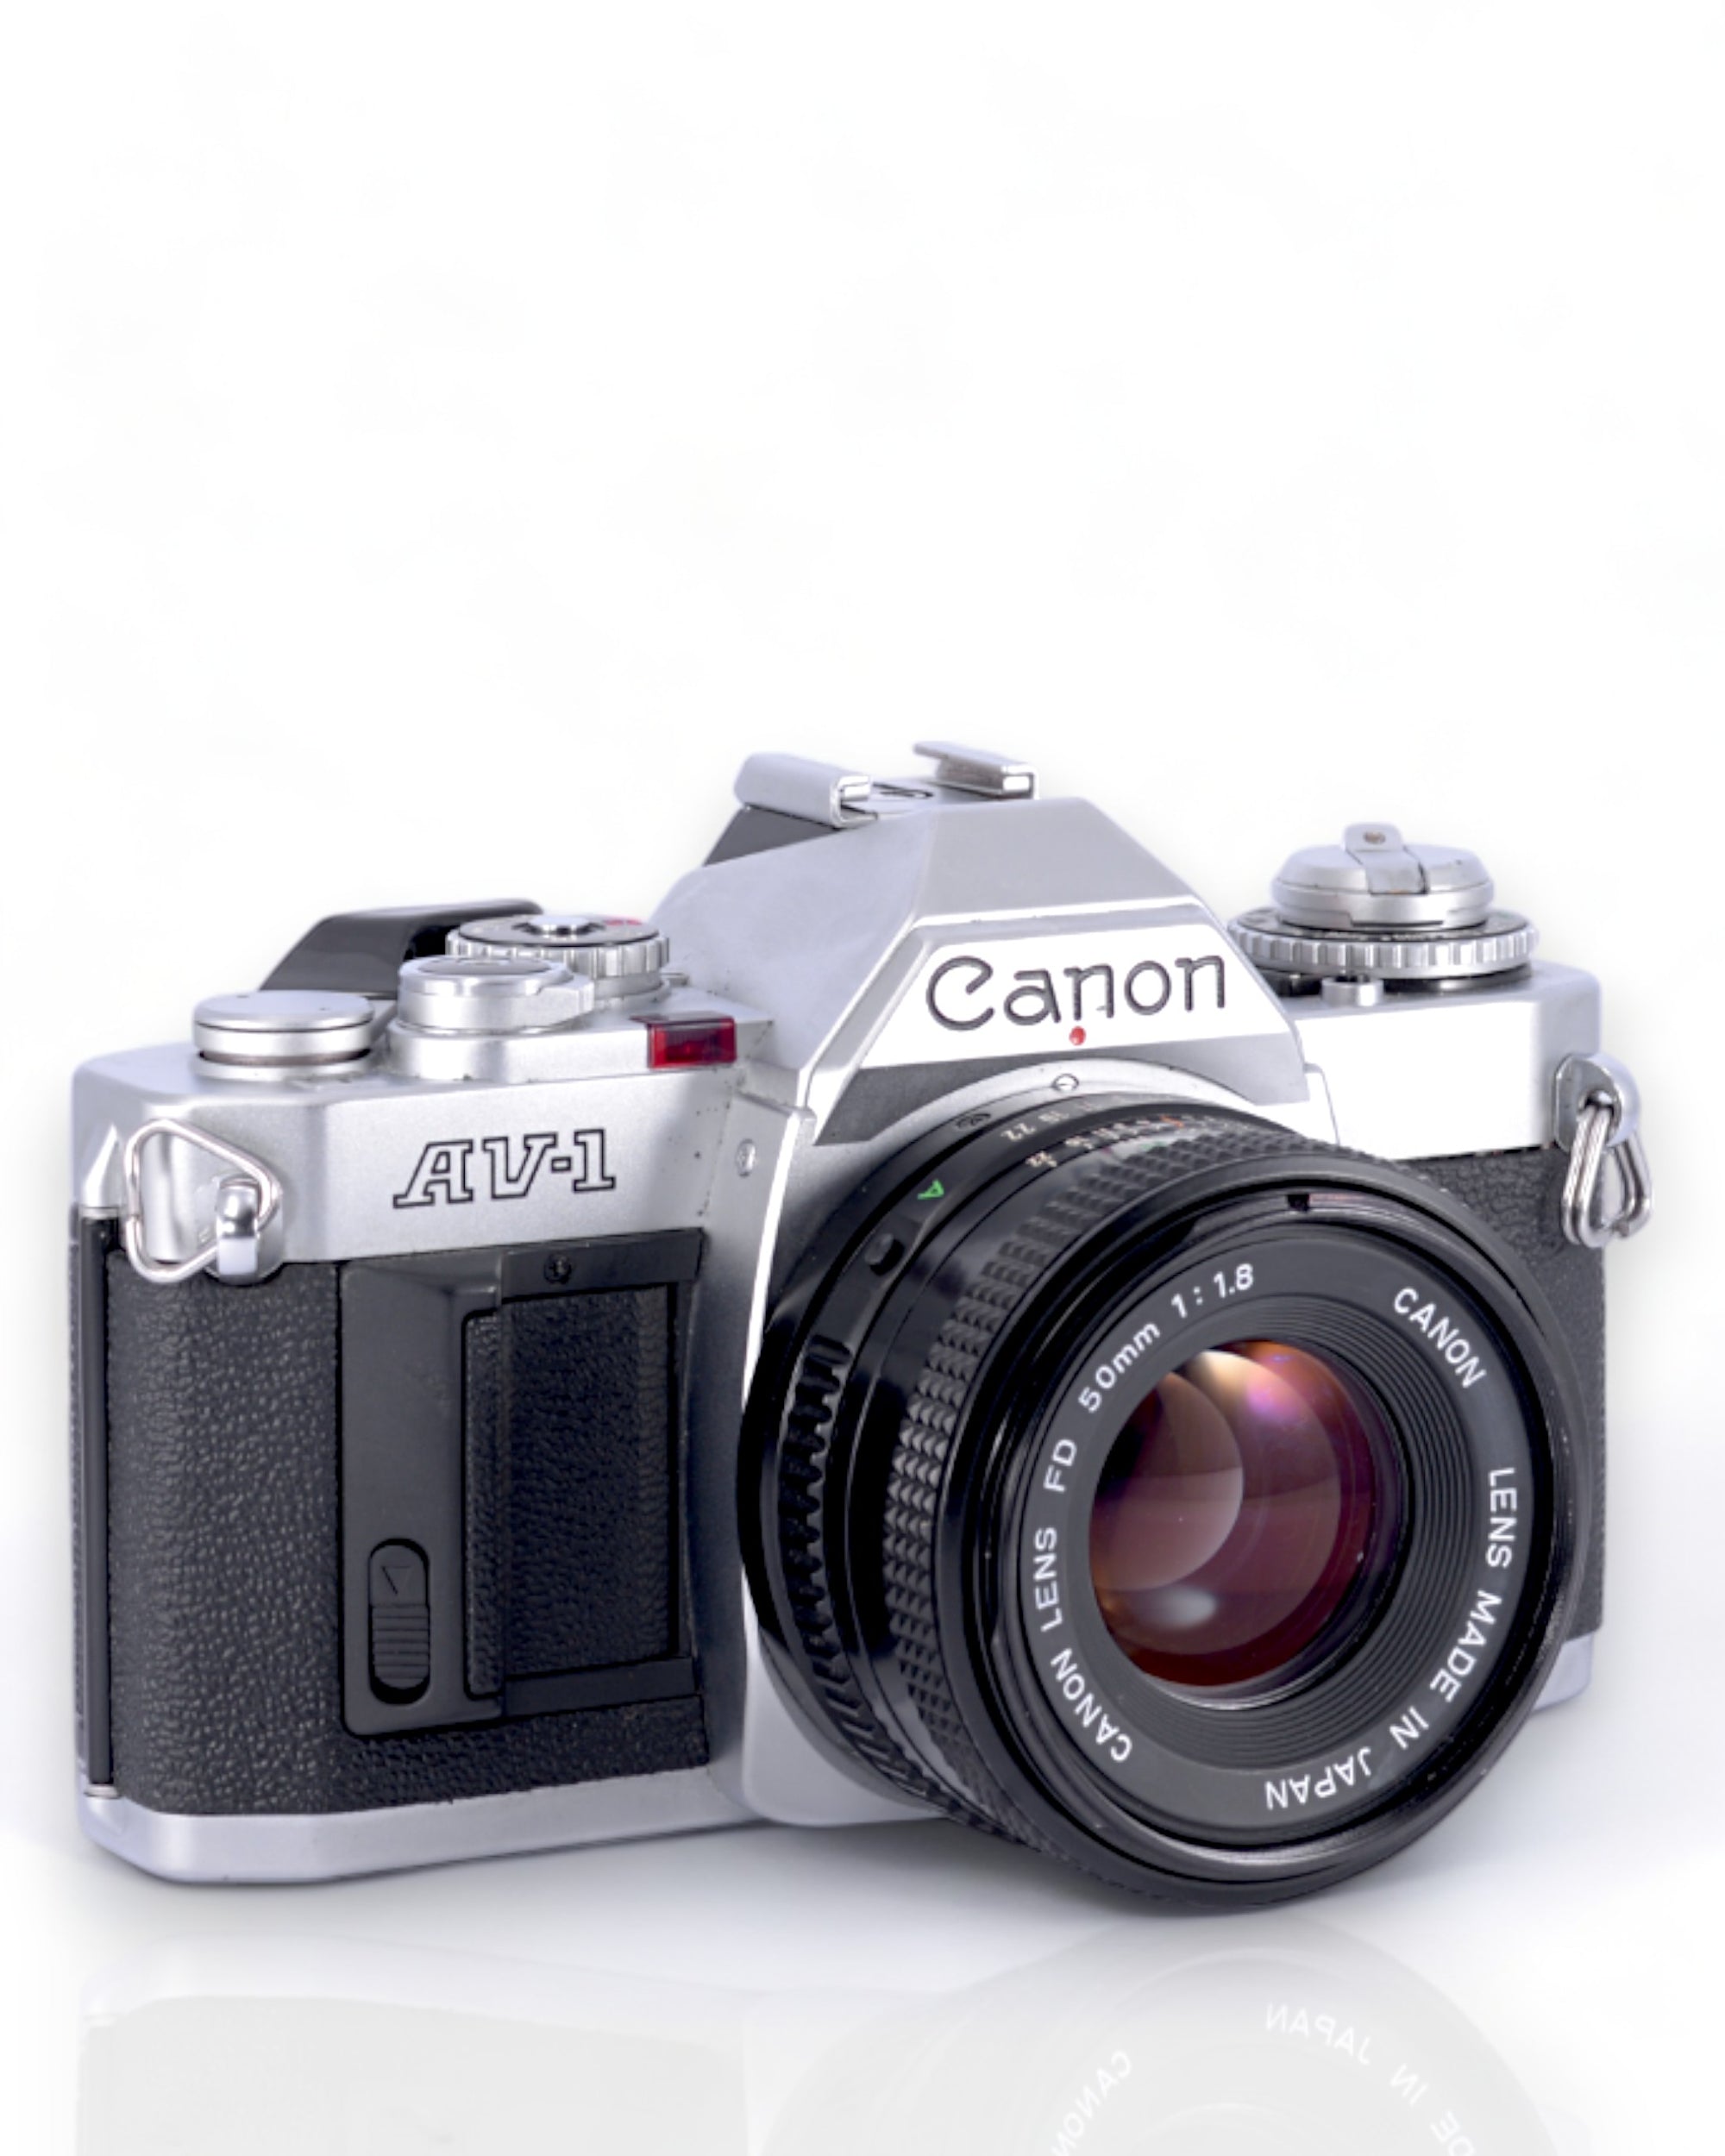 Canon AV-1 35mm SLR Film Camera with 50mm f1.8 Lens